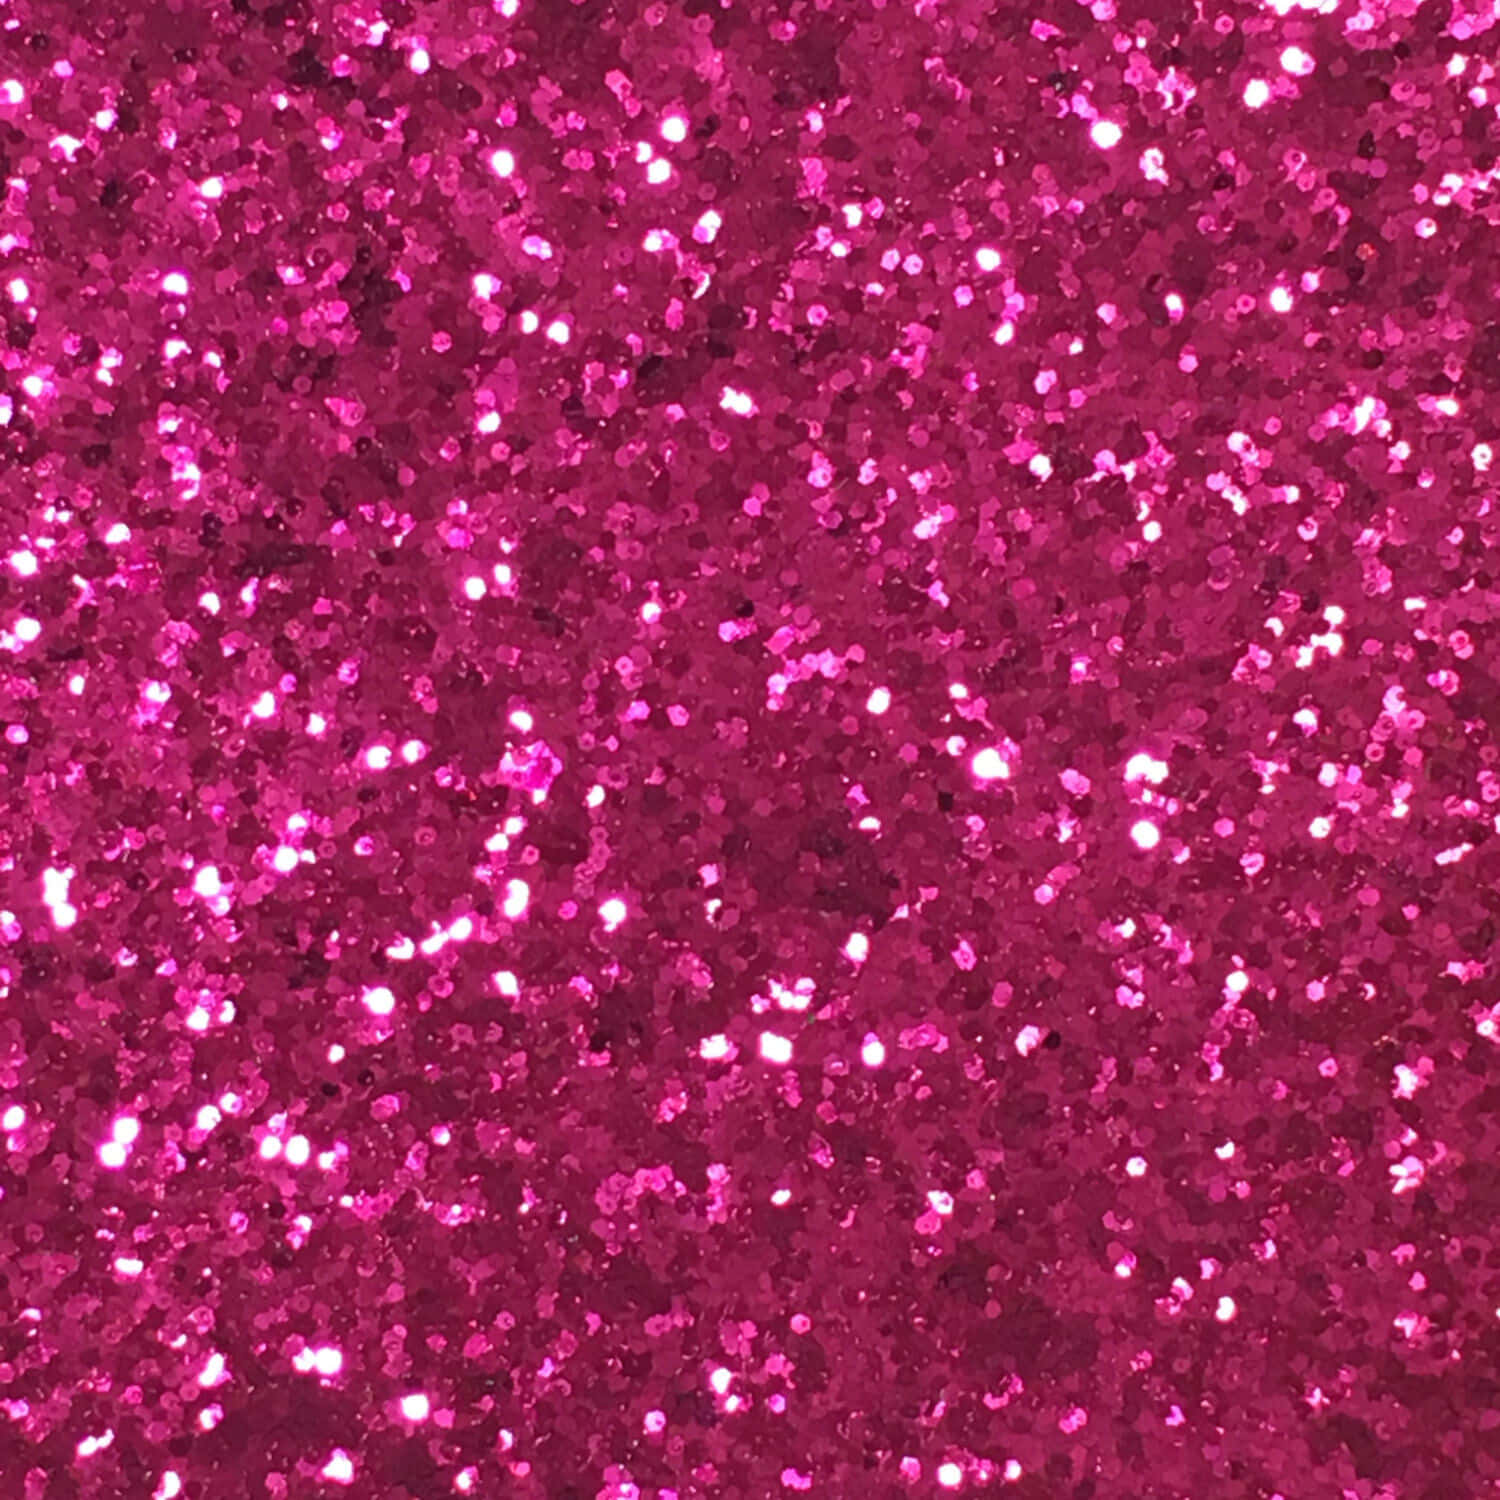 Vibrant Hot Pink Glitter Background